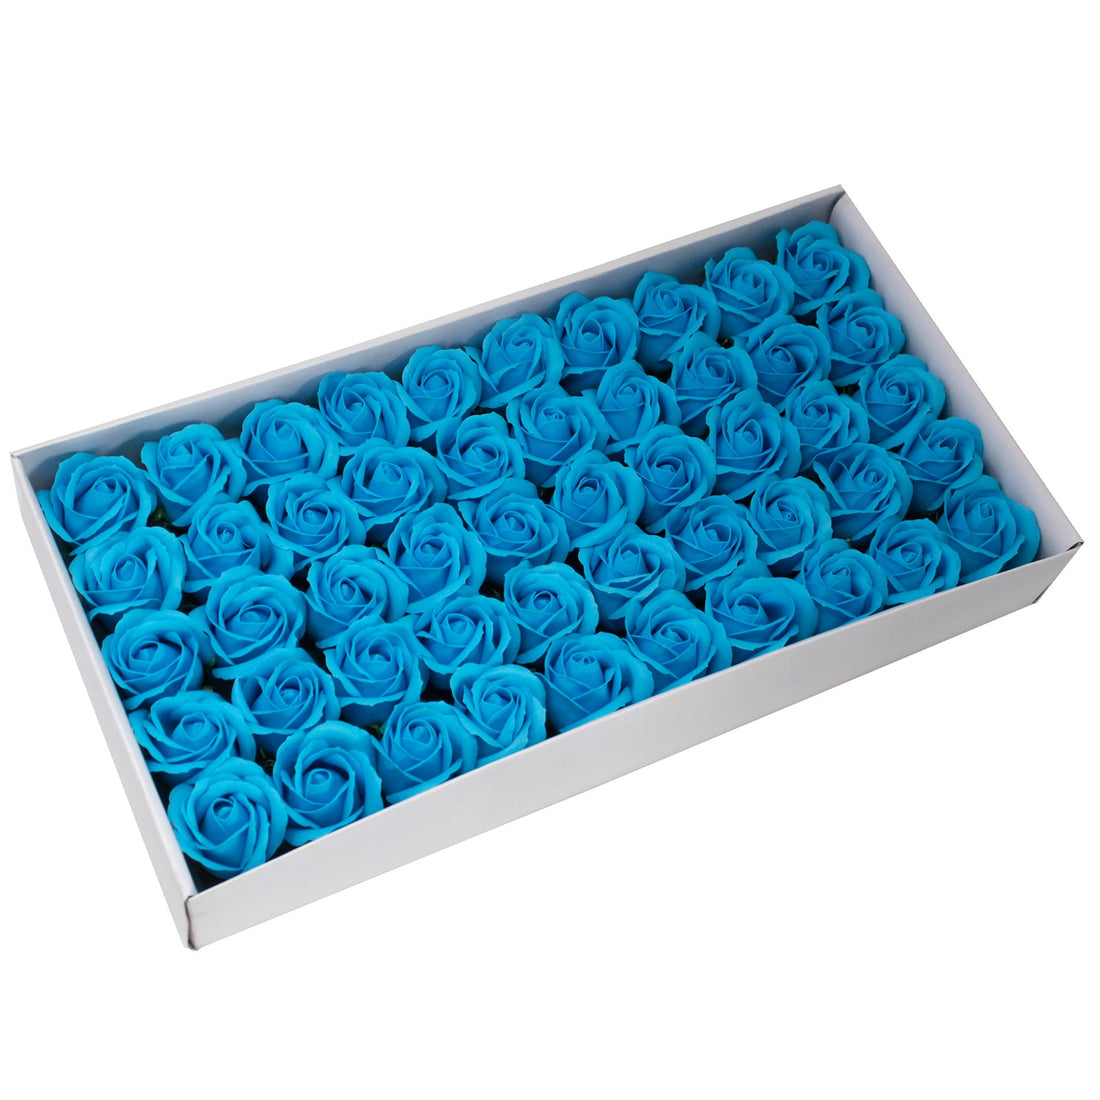 Craft Soap Flowers - Med Rose - Sky Blue x 10 pcs